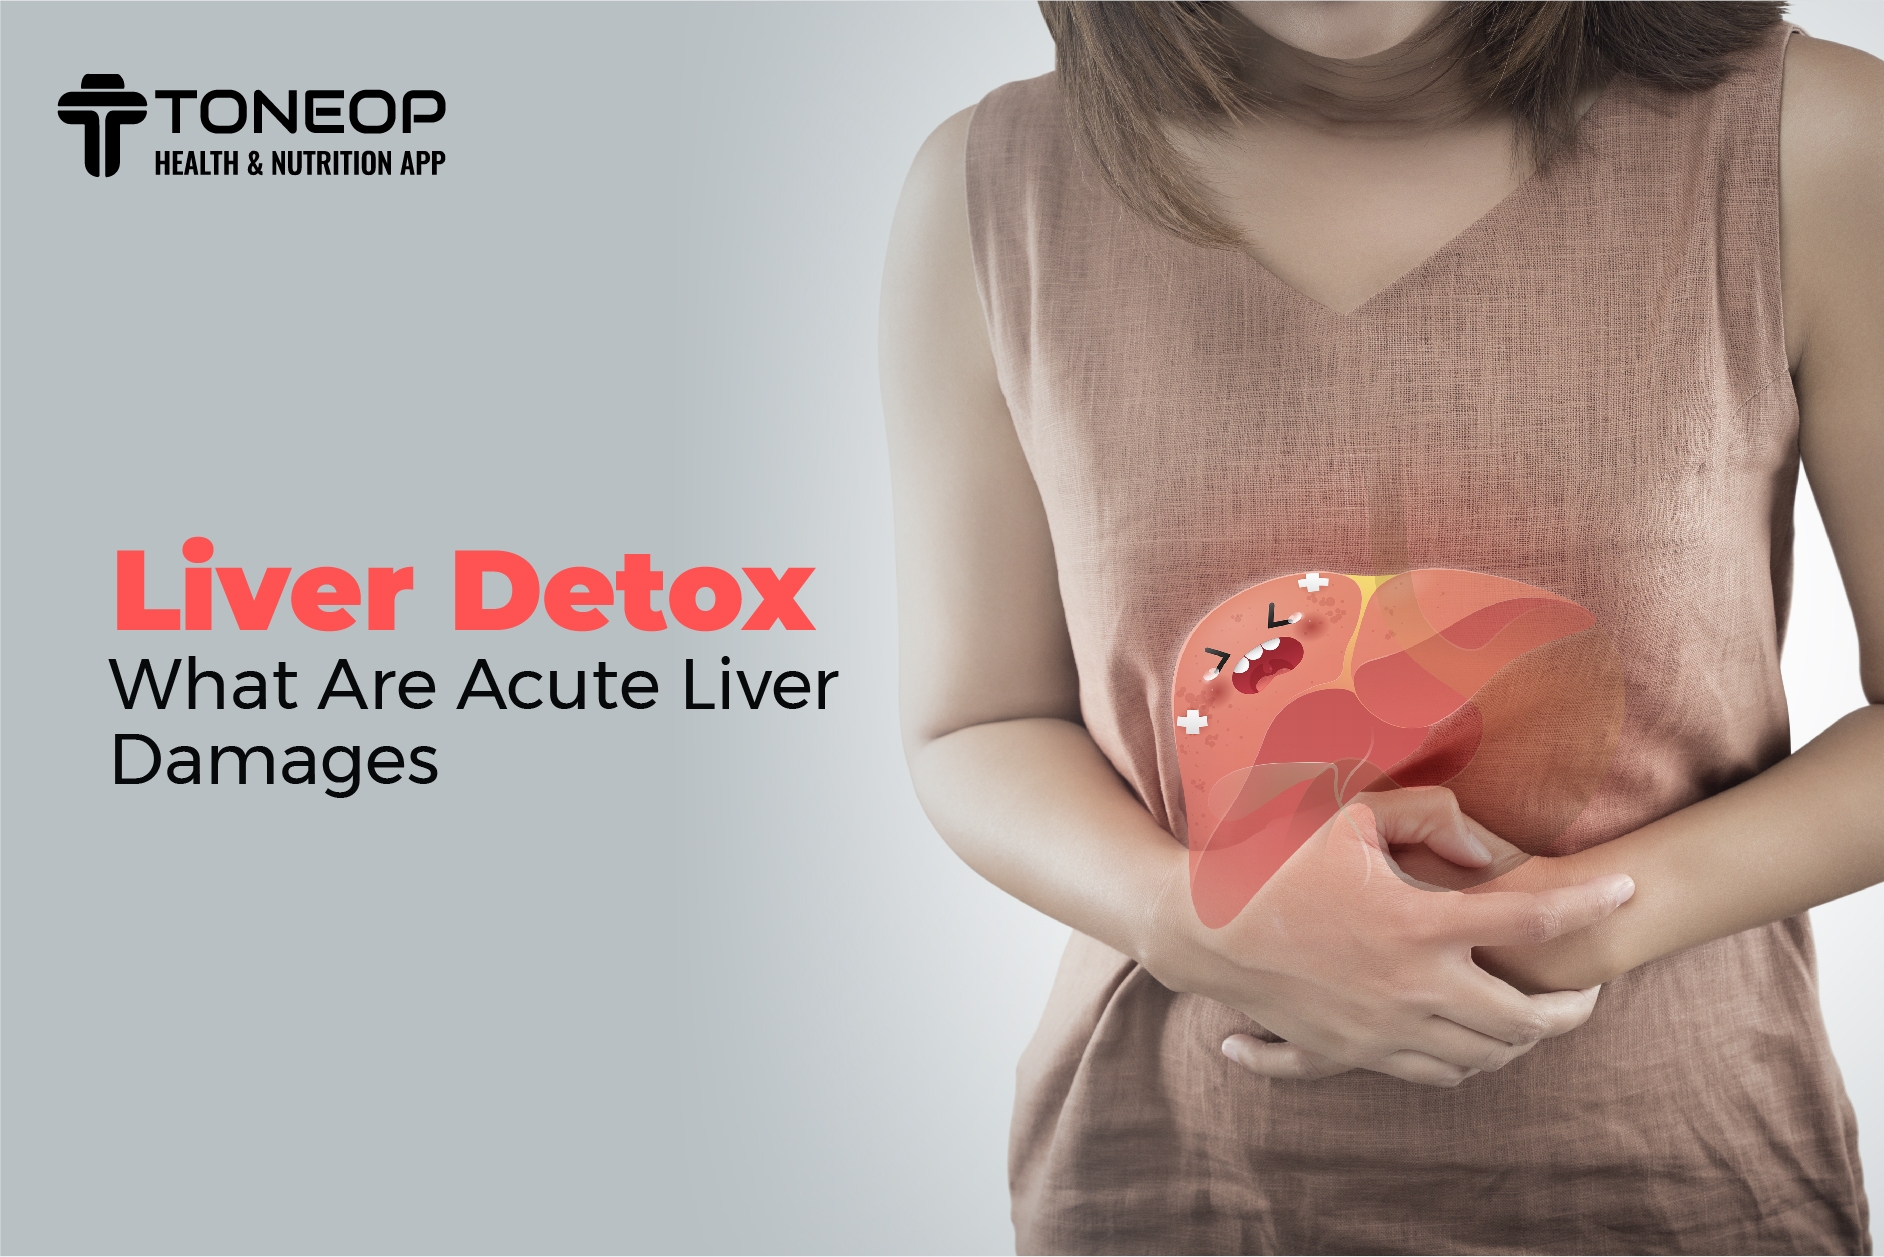 Liver Detox: What Are Acute Liver Damages